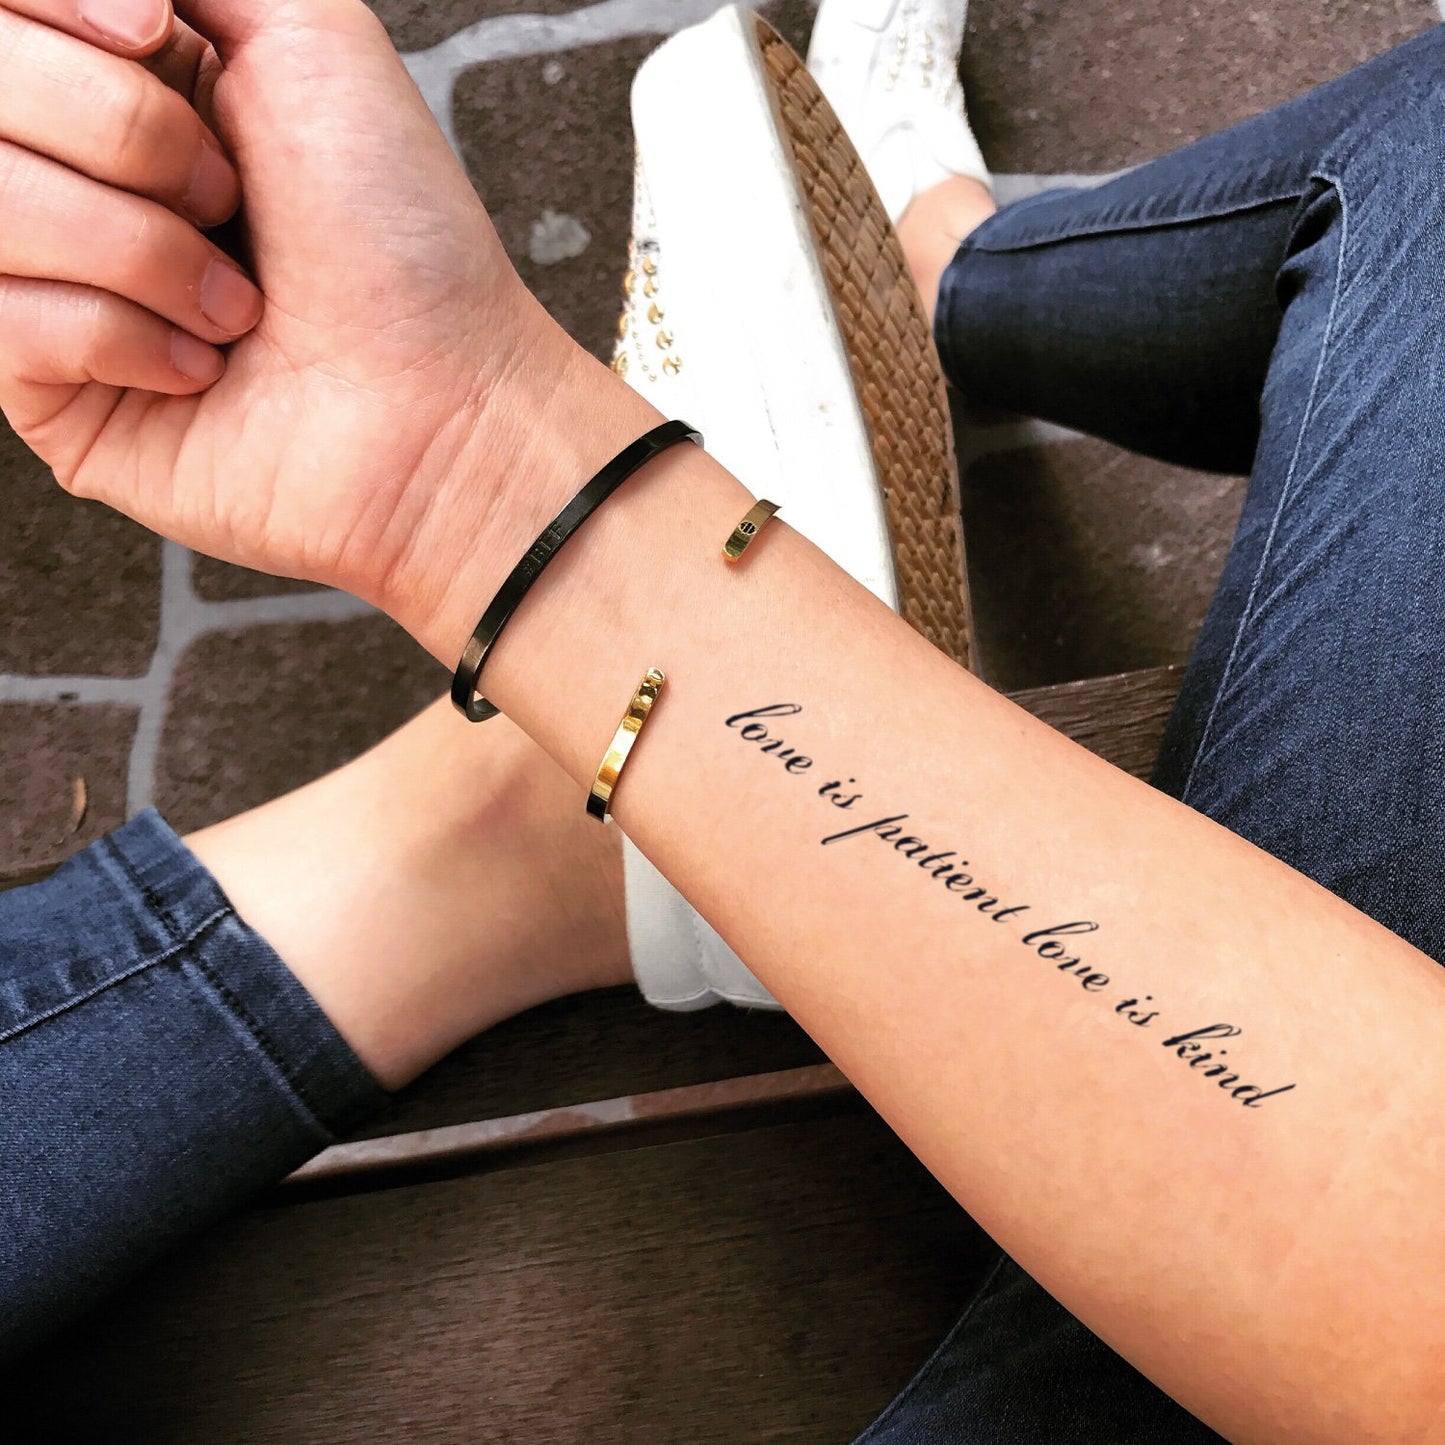 fake medium love is patient love is kind lettering temporary tattoo sticker design idea on forearm